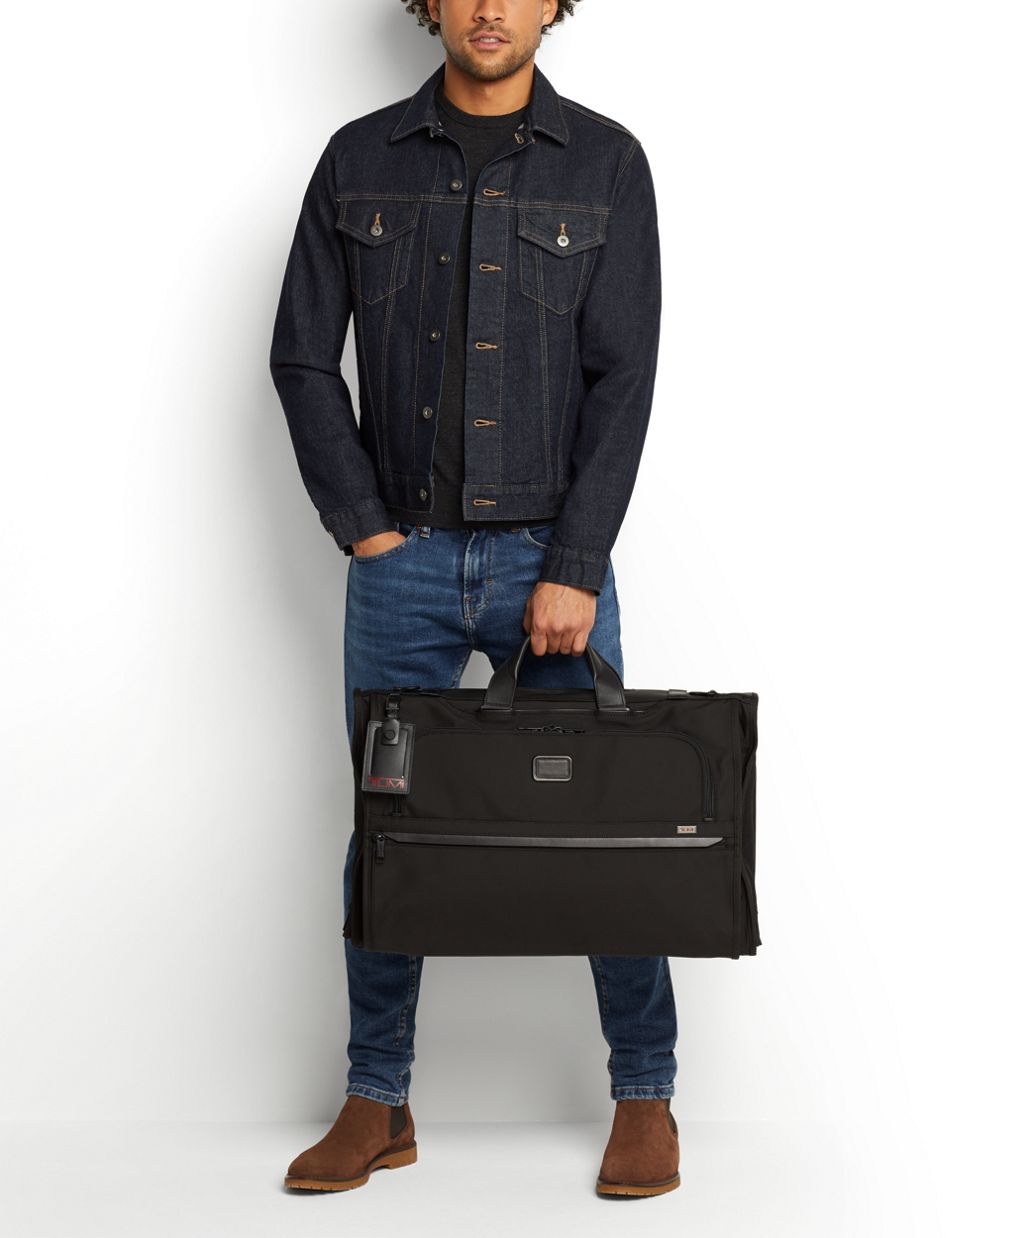 Anterior Sangrar Descortés Garment Bag Tri-Fold Carry-On | Tumi US